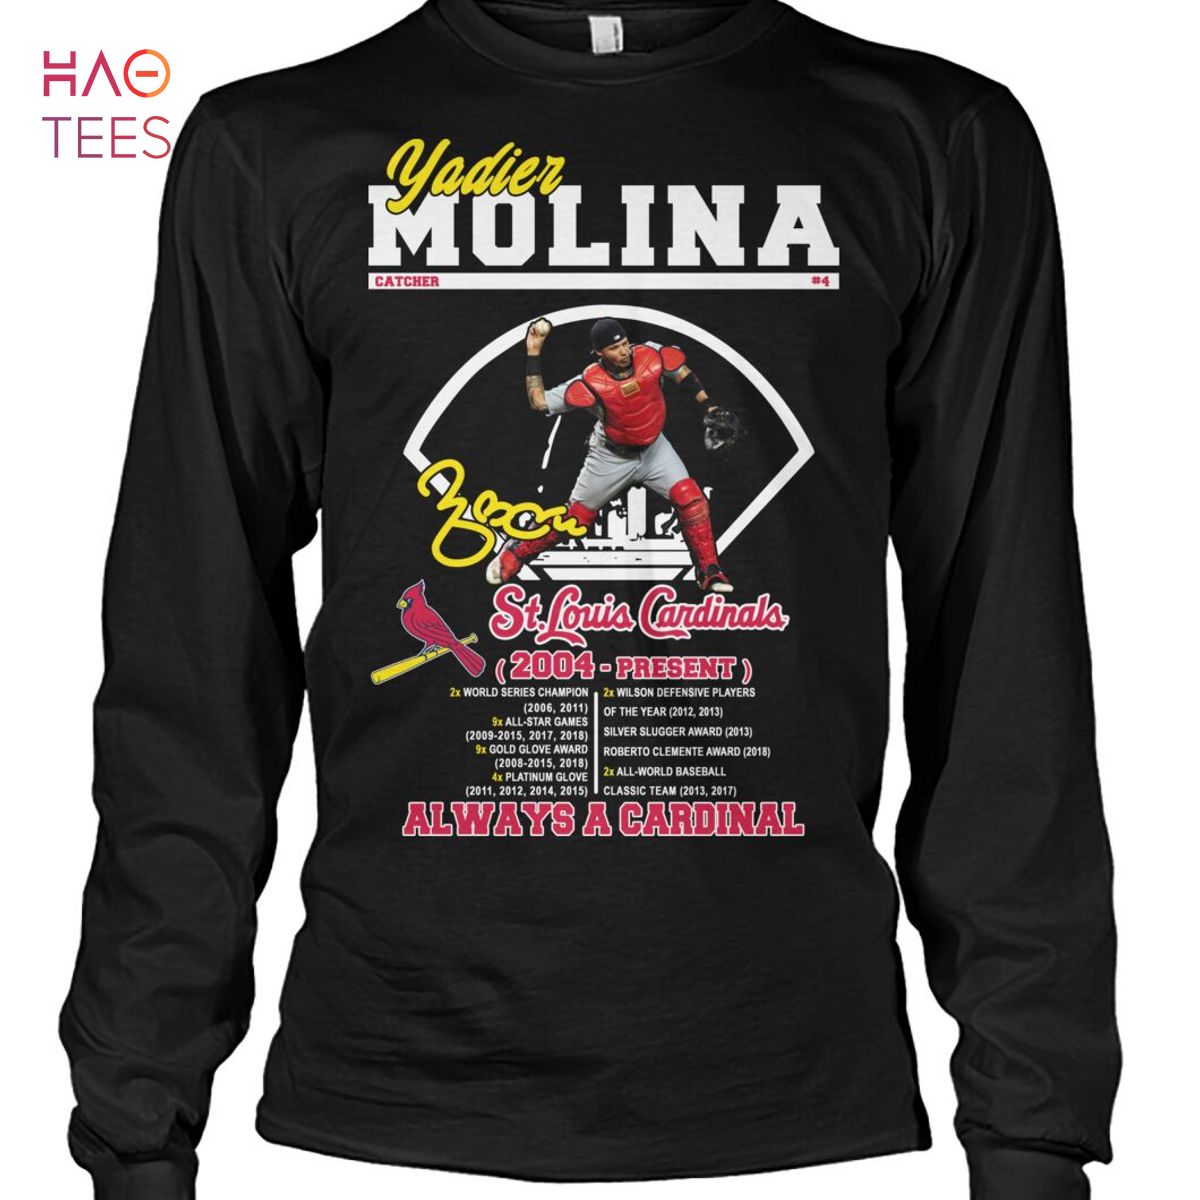 Yadier Molina ST Louis Cardinals 2004 Present Always A Cardinal T